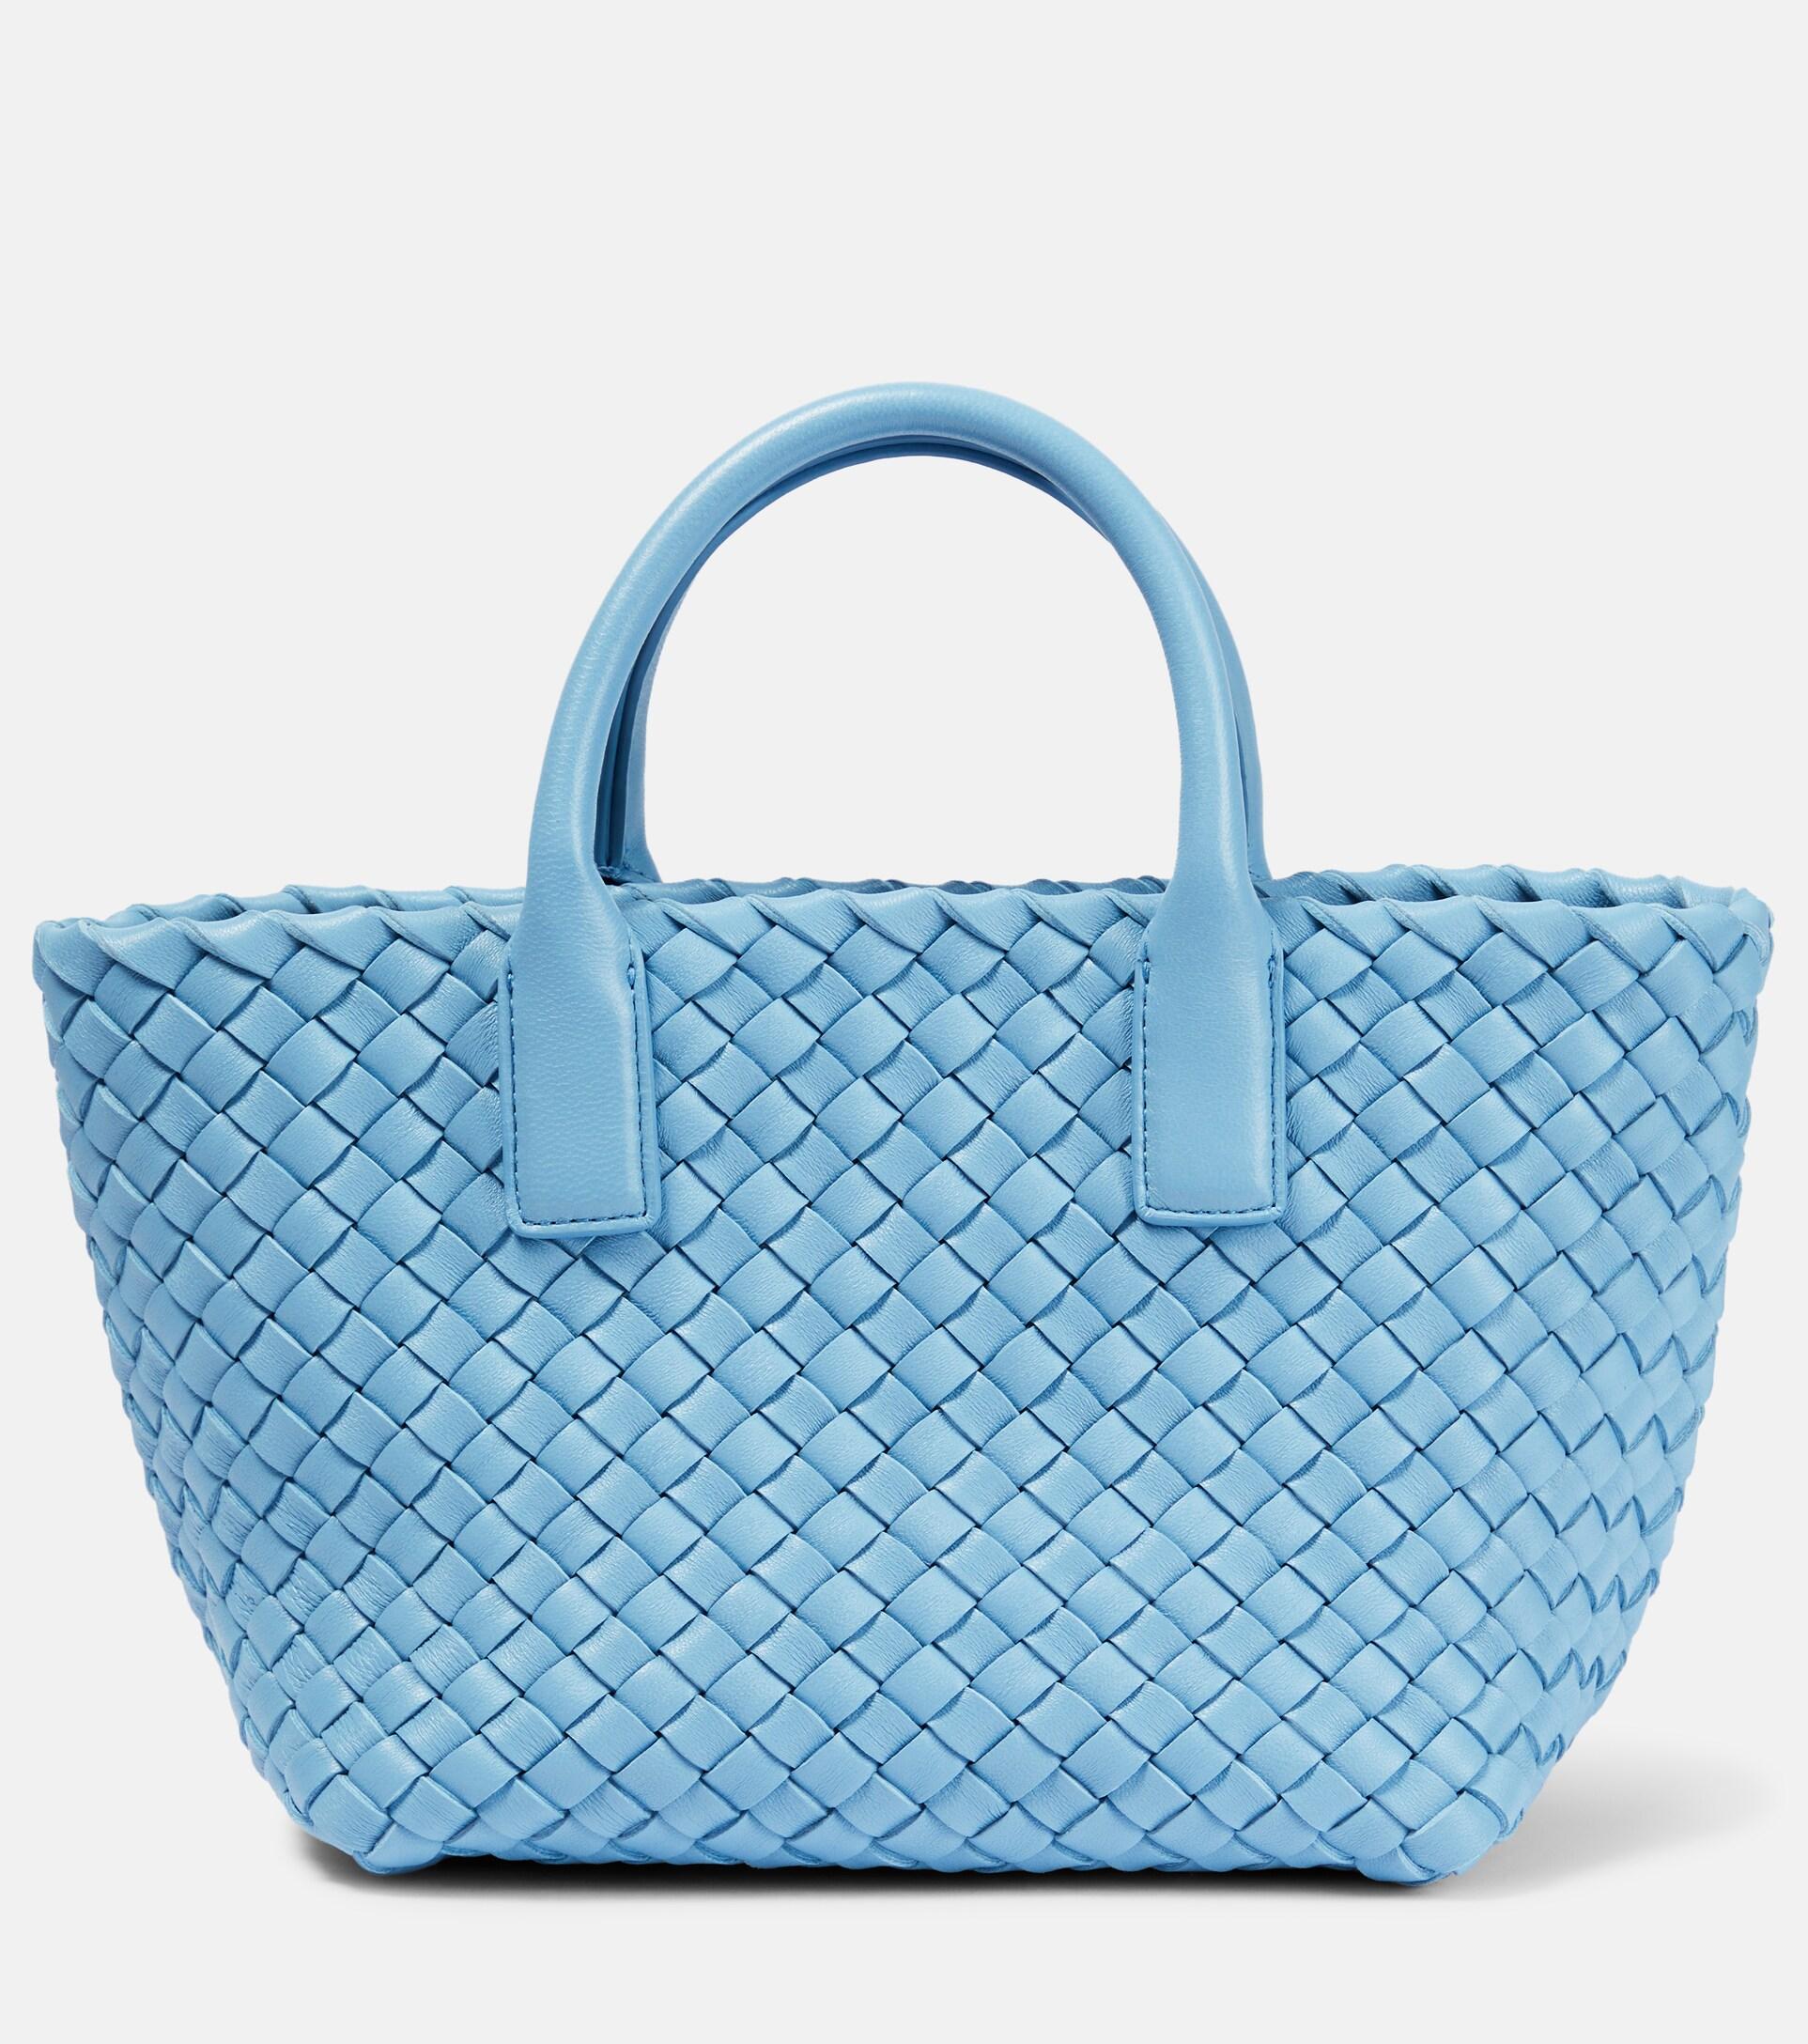 Bottega Veneta Cabat Mini Leather Tote Bag in Blue | Lyst